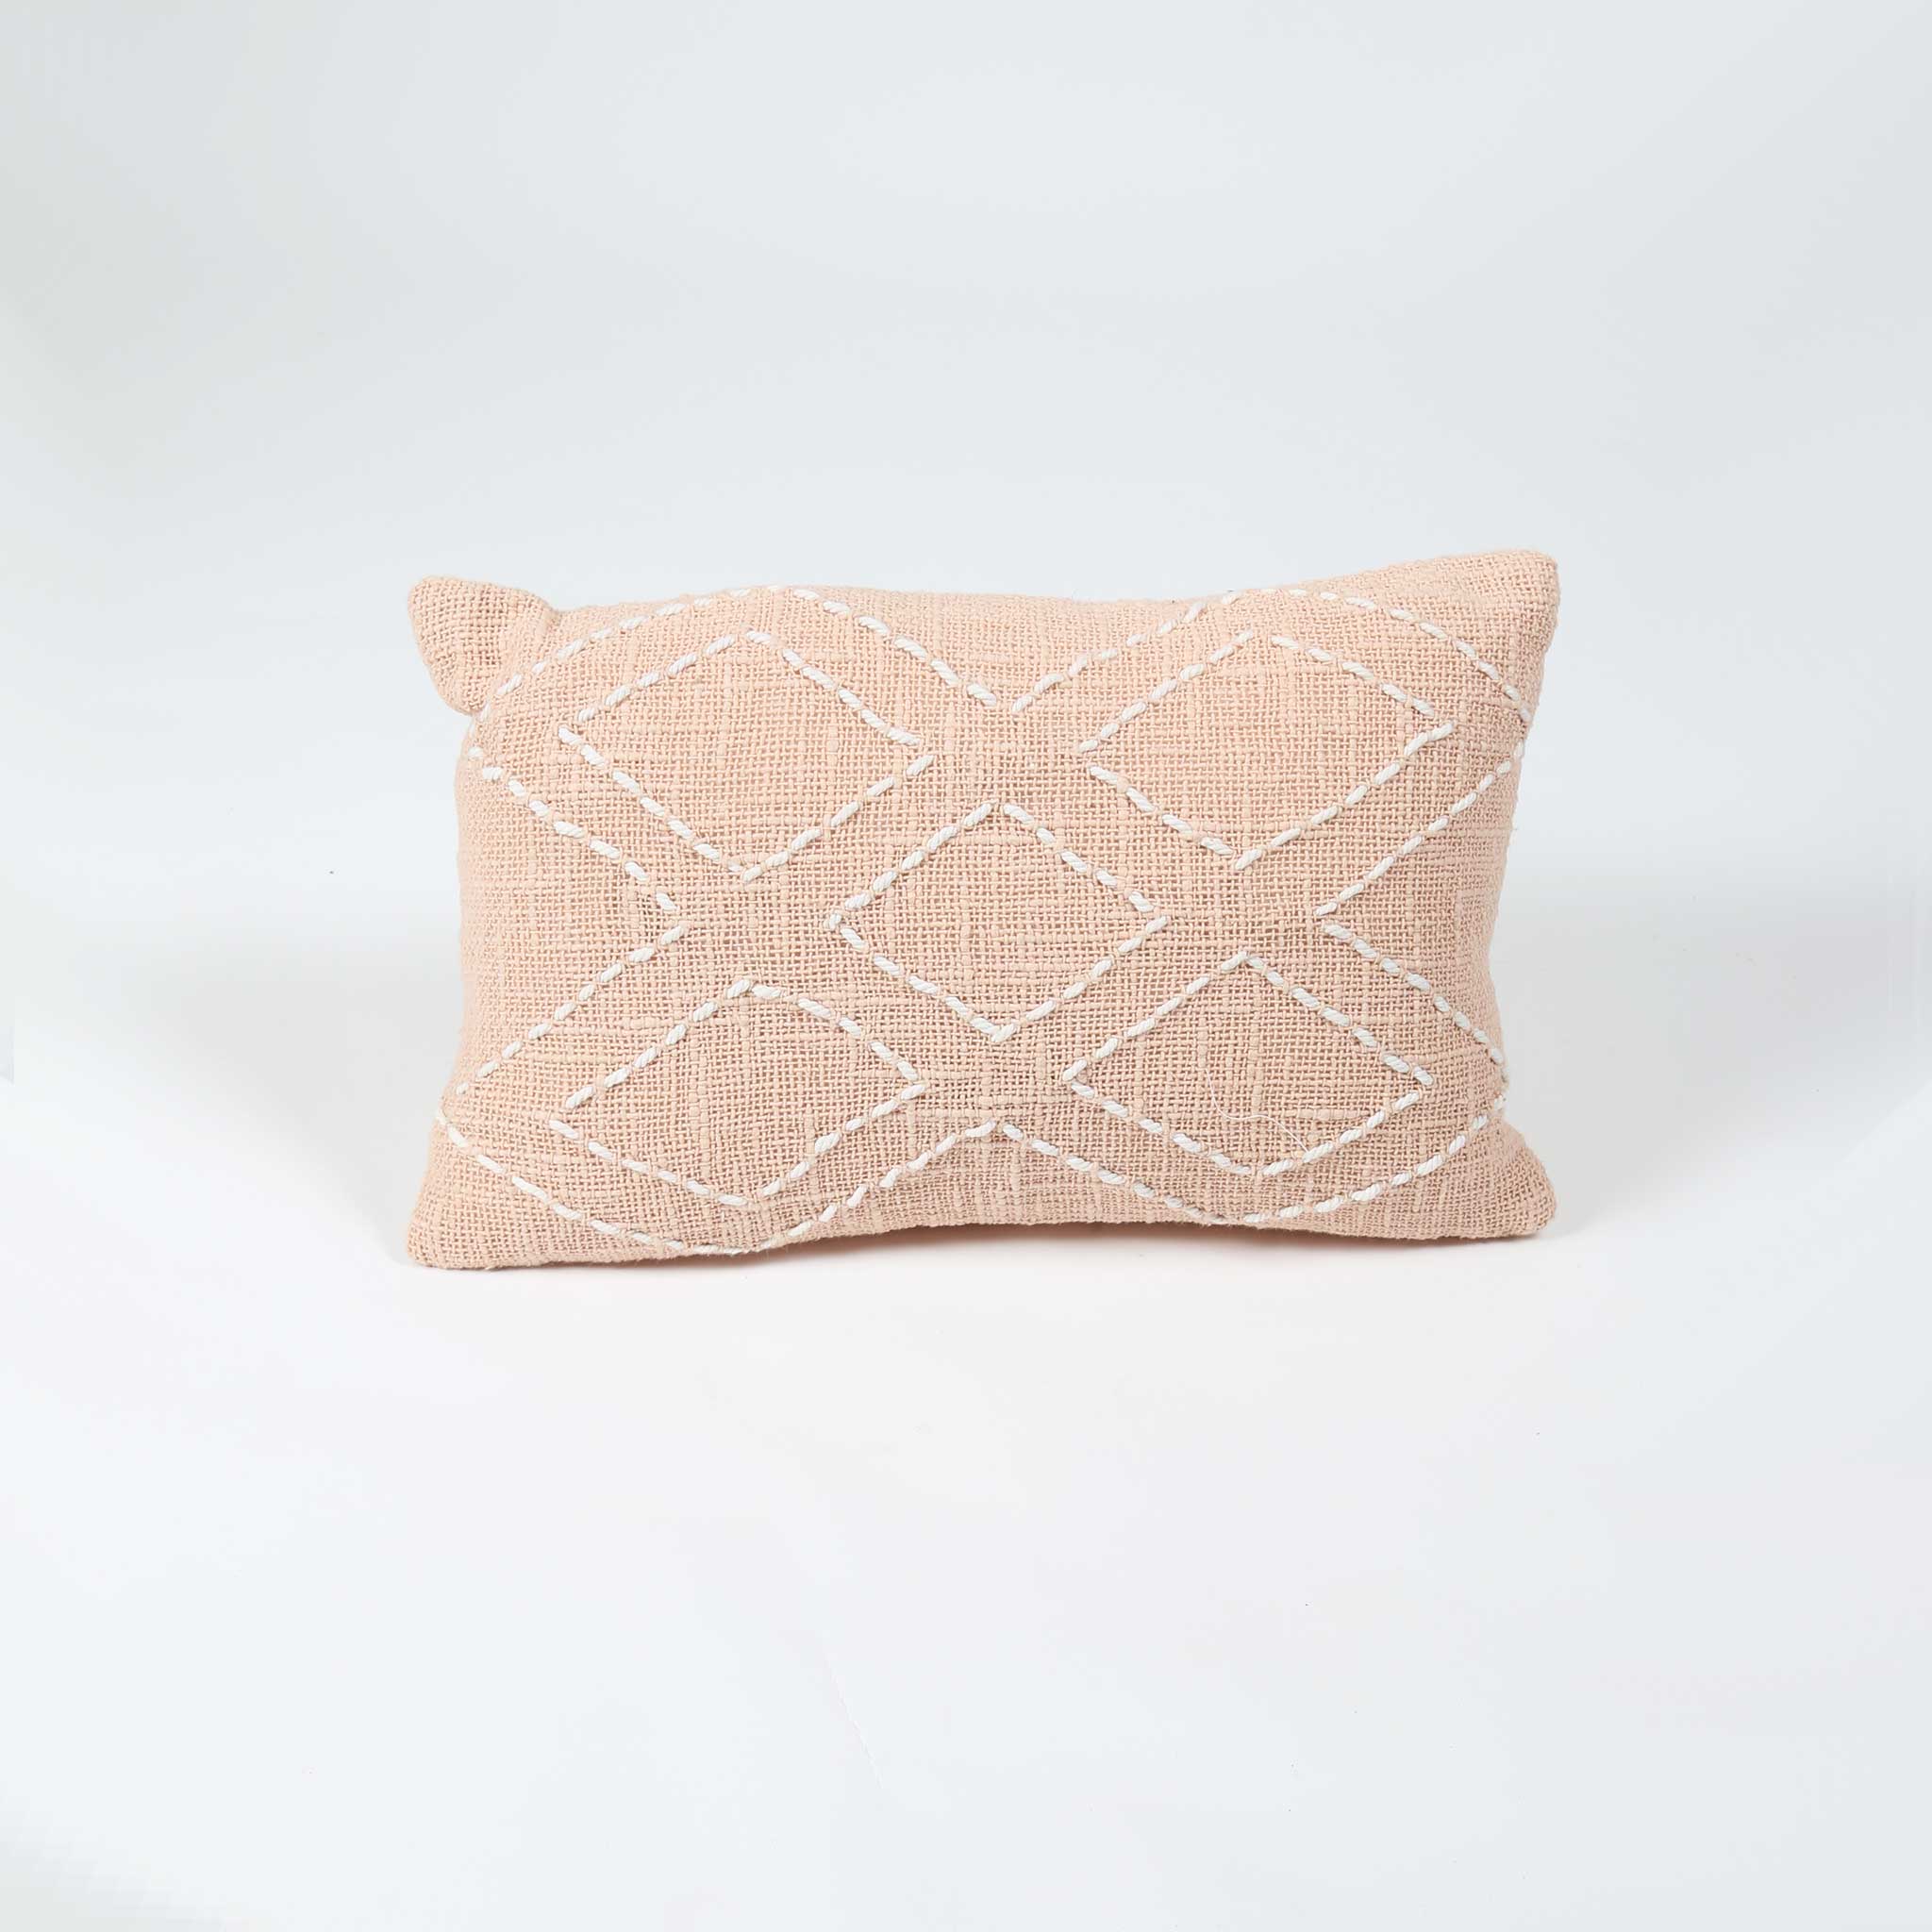 Blush Pink Cotton Cushion Cover with Cross Pattern Stitching